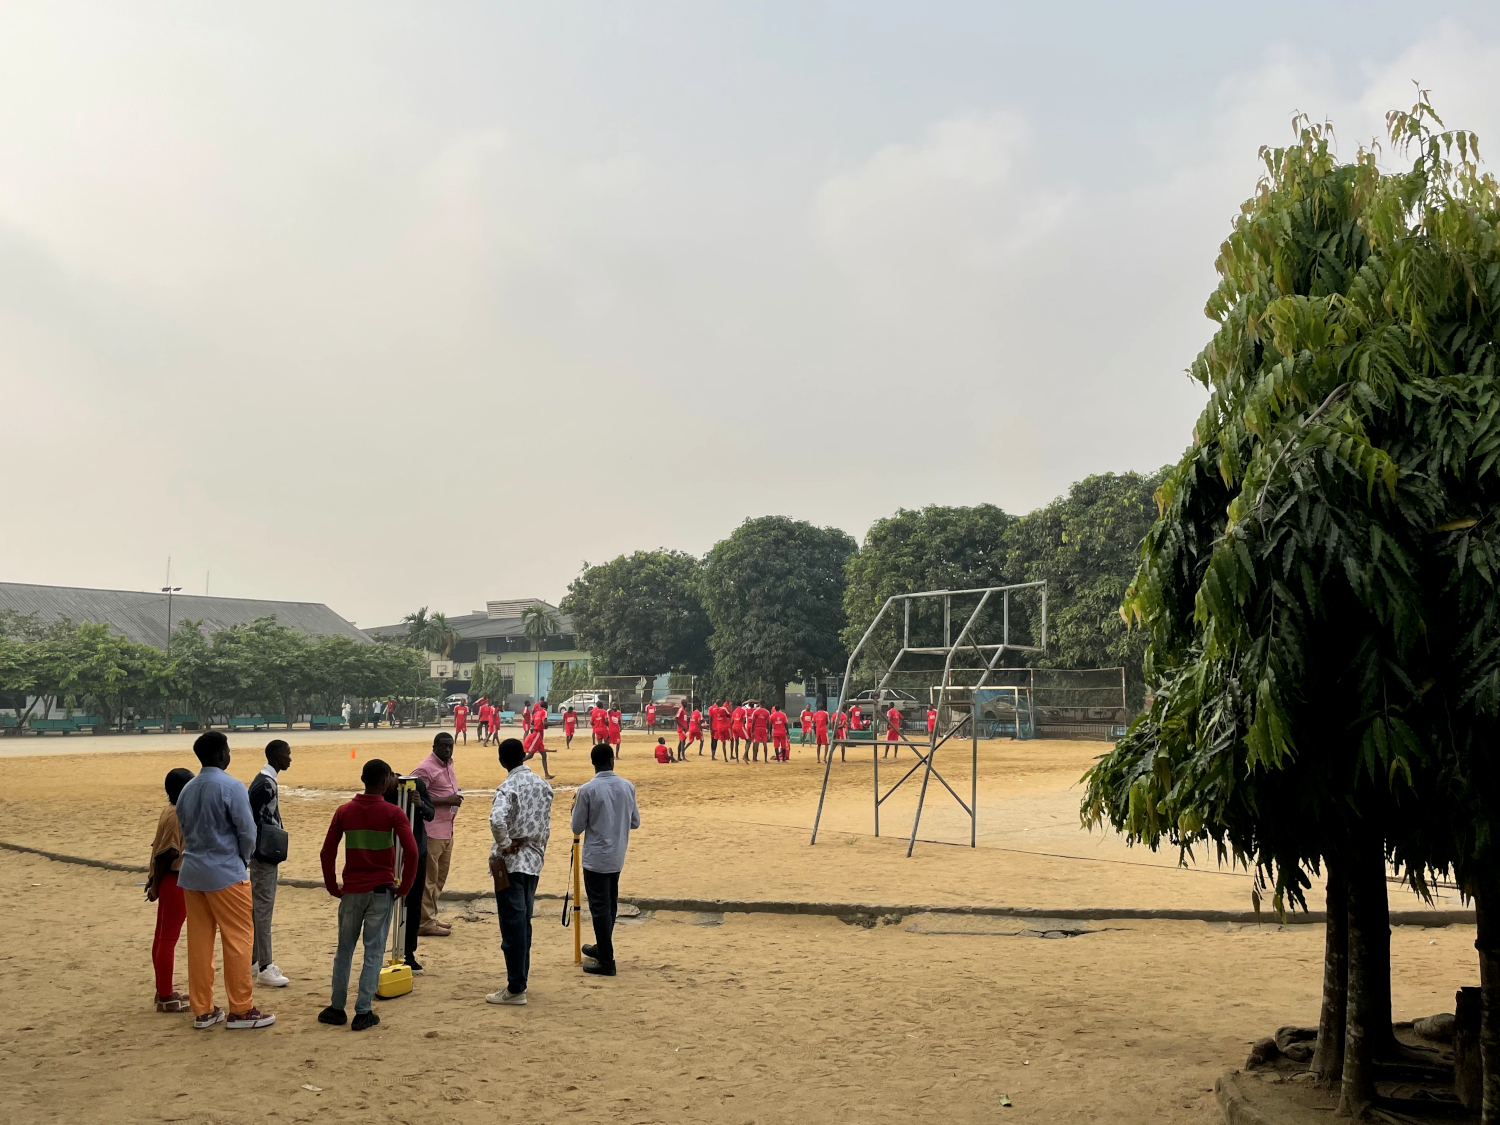 Le terrain de sport du collège de La Salle de Douala © Globe Reporters